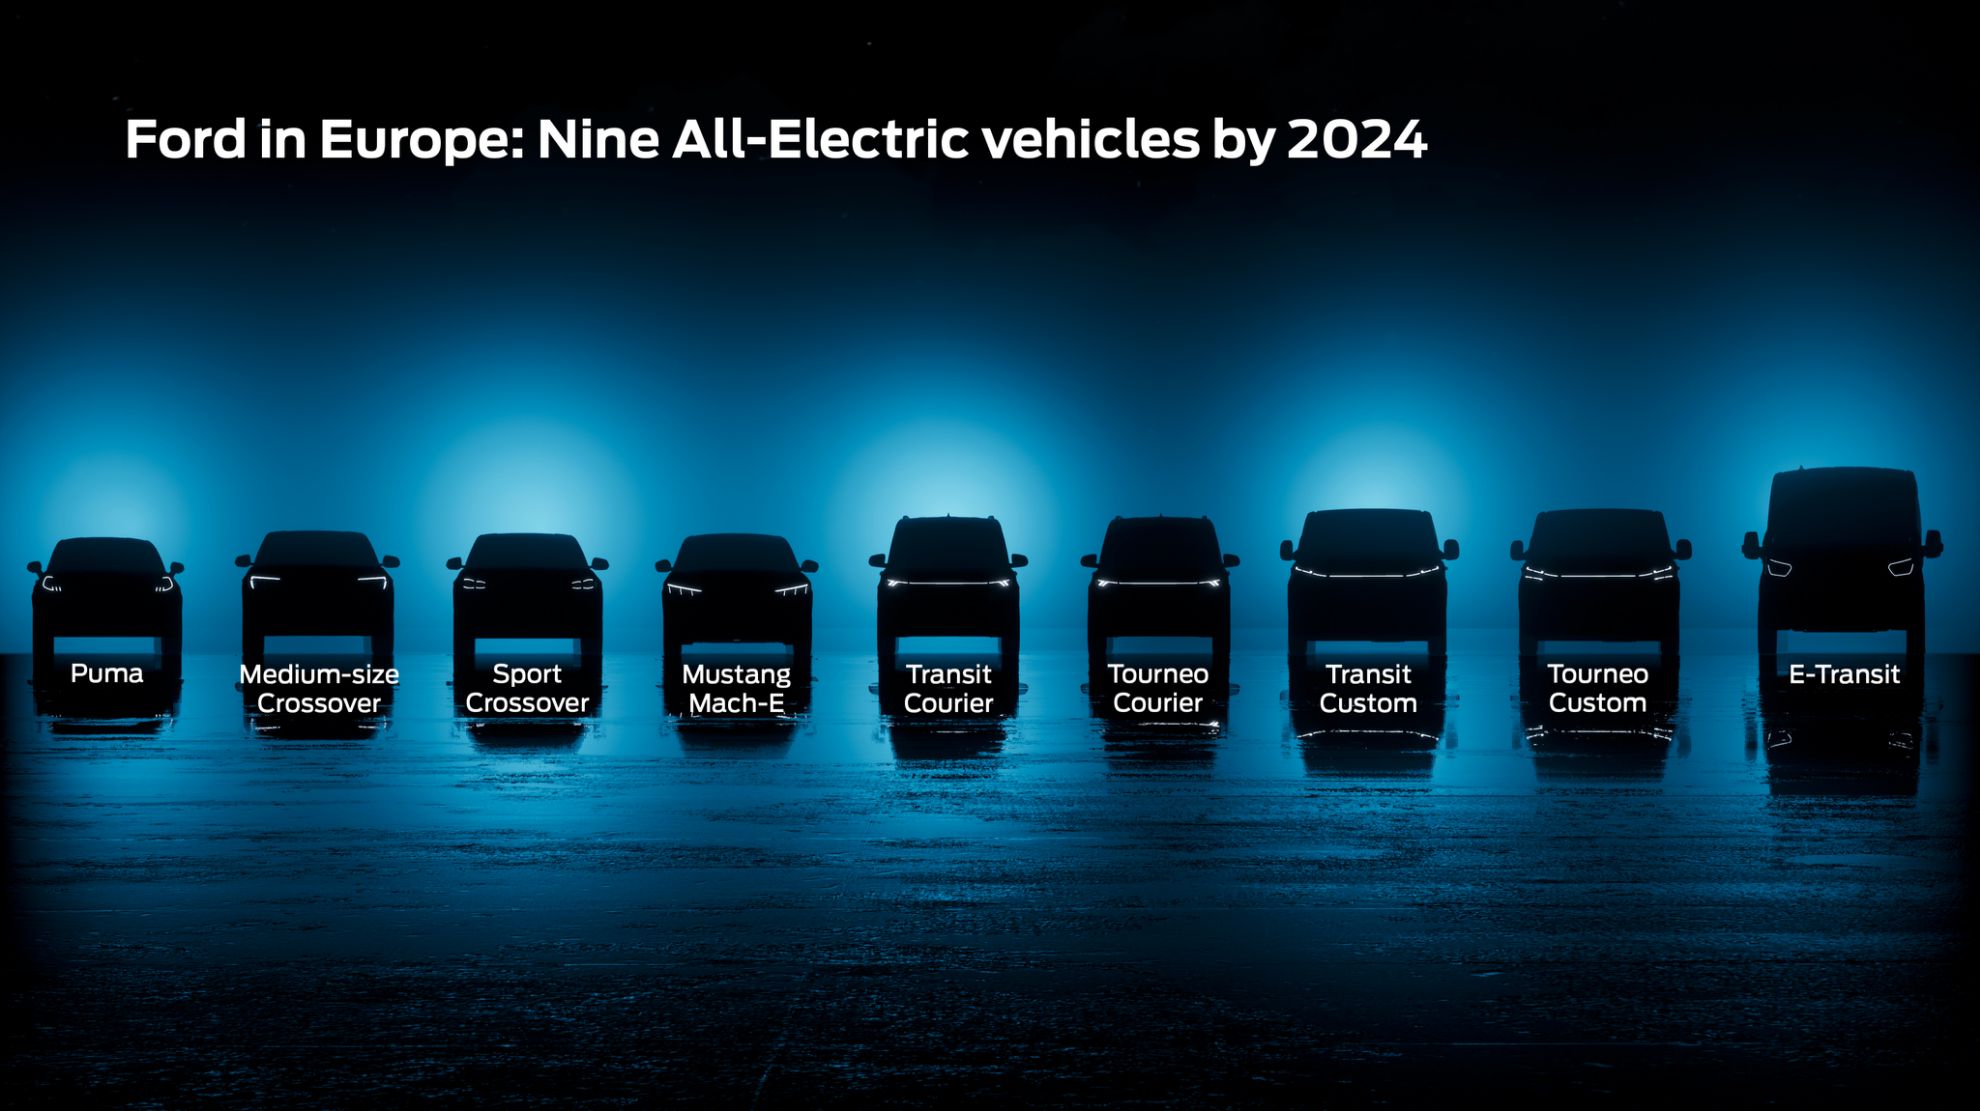 coches electricos - almussafes - ford valencia - electricos ford - fabricacion